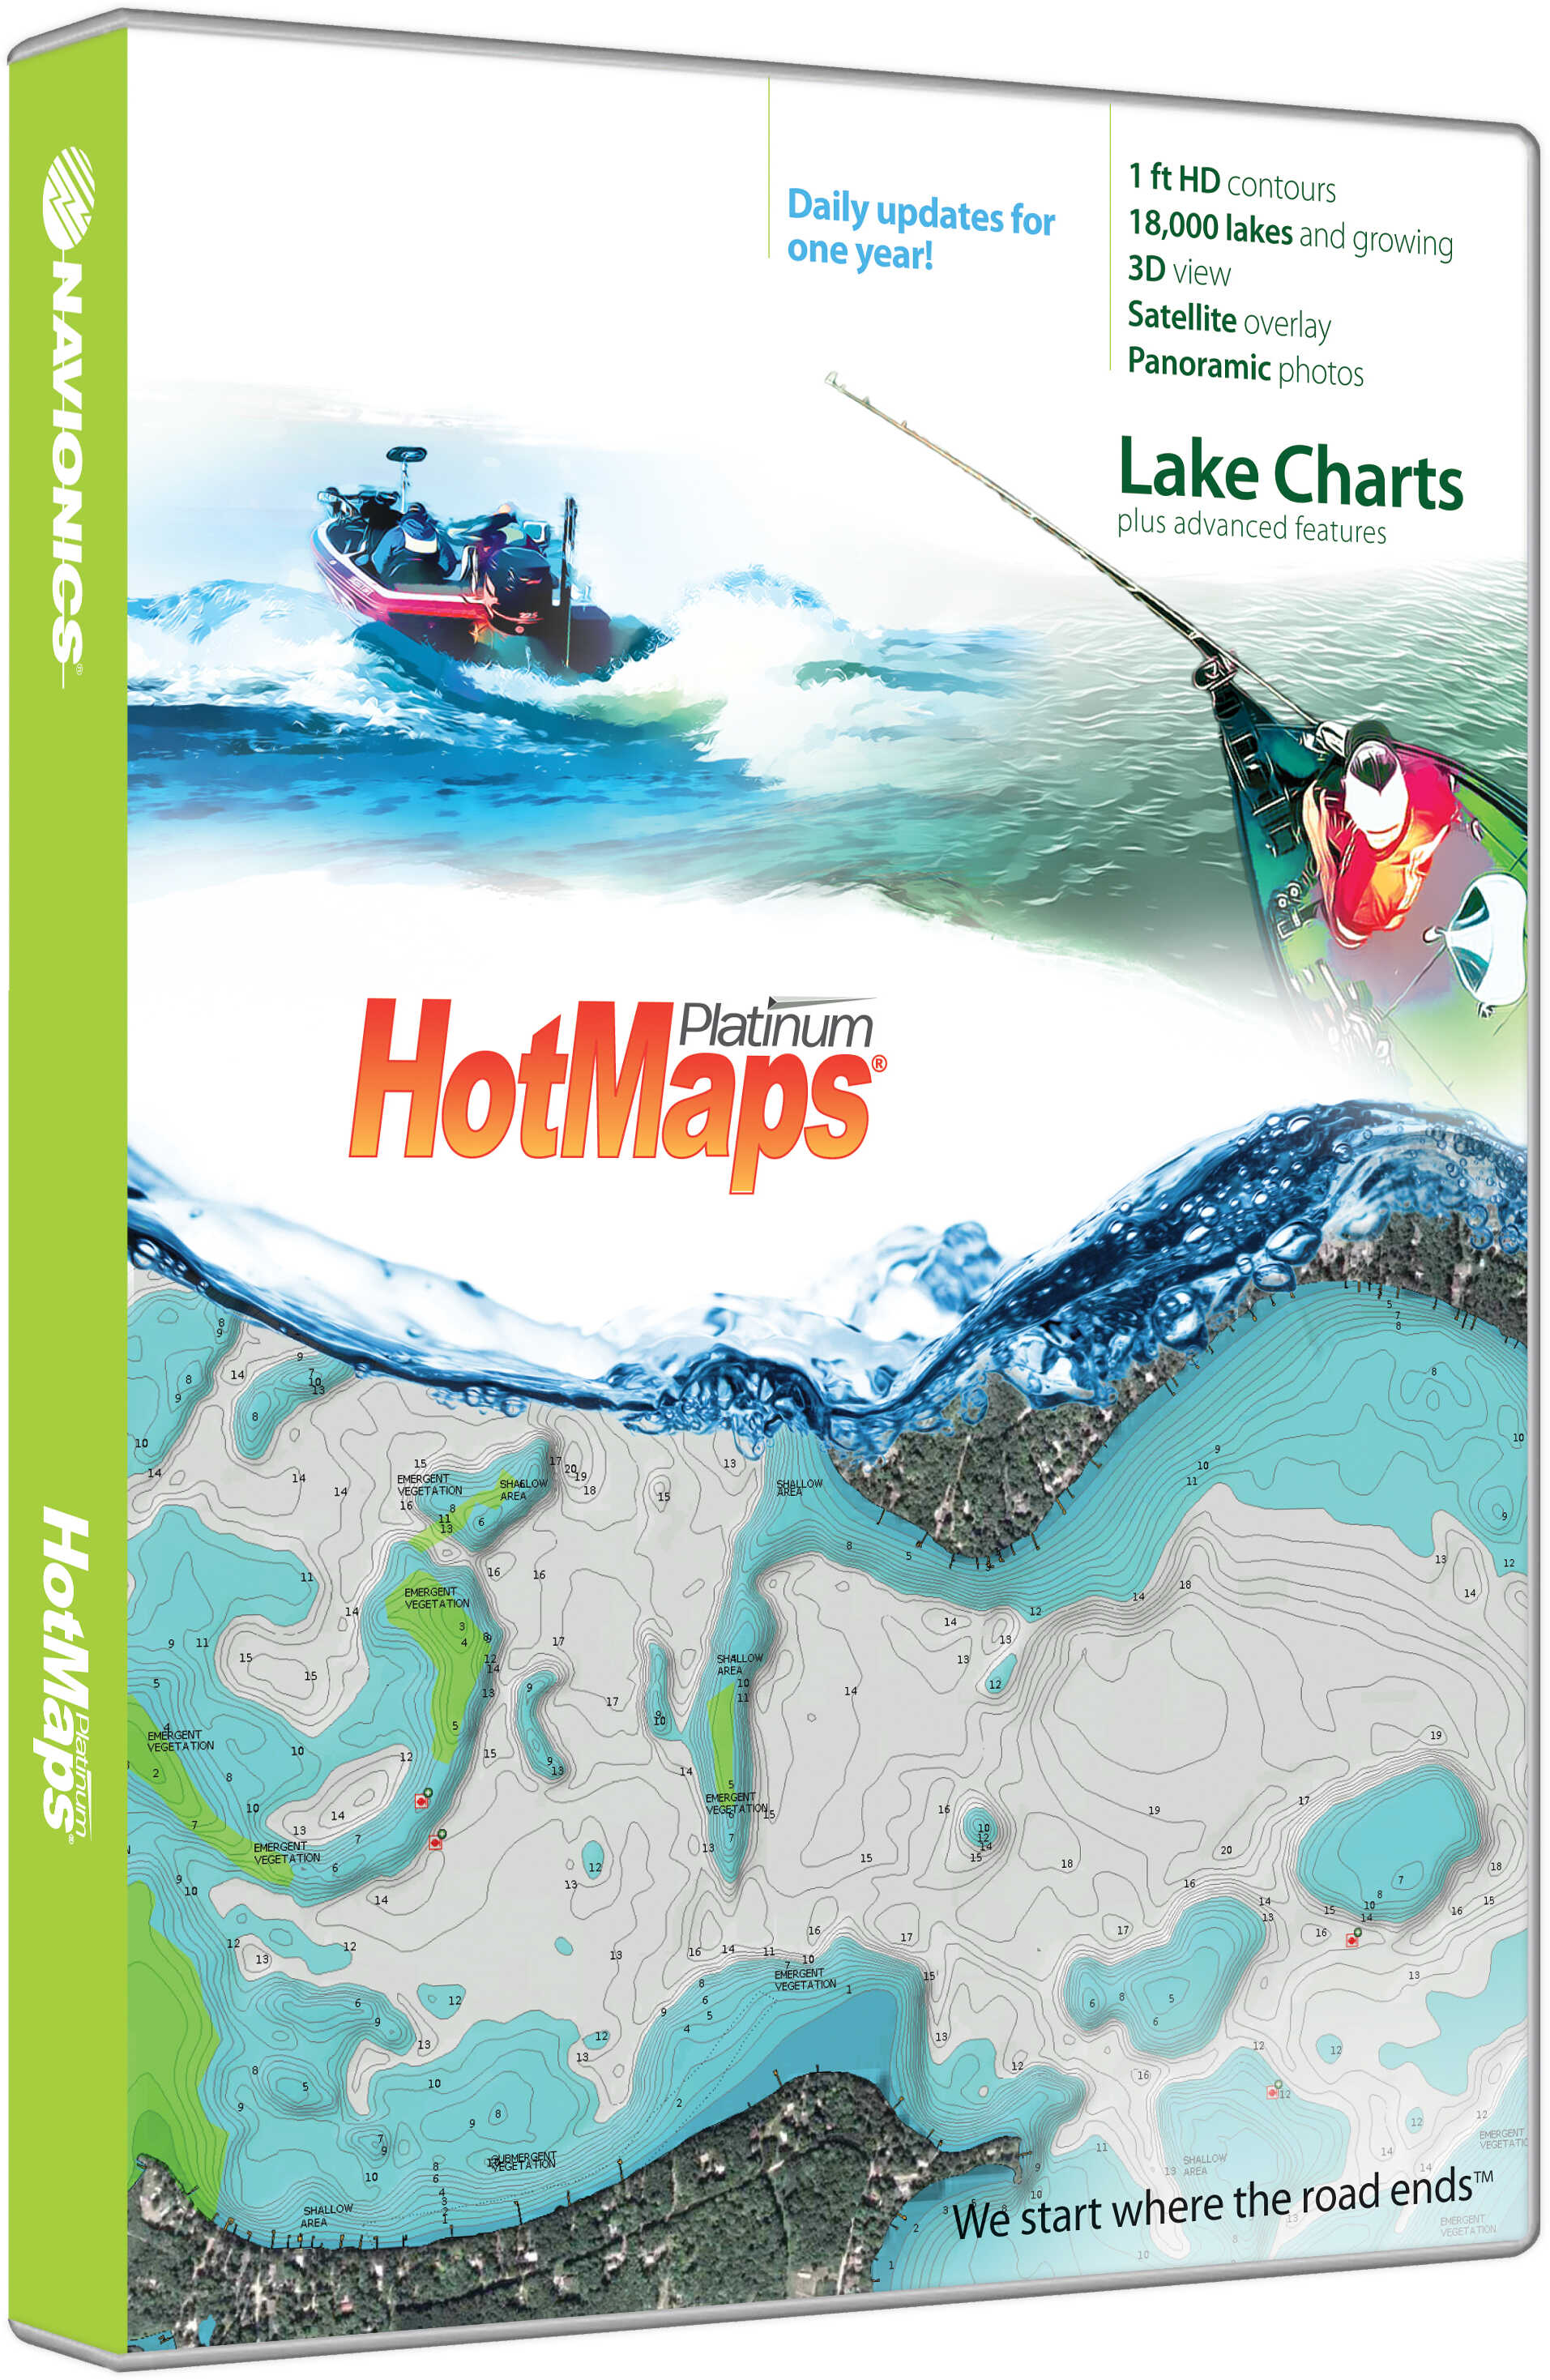 Navionics Hot Maps Plat East MSD/MMPT-E6 HMPT-E6